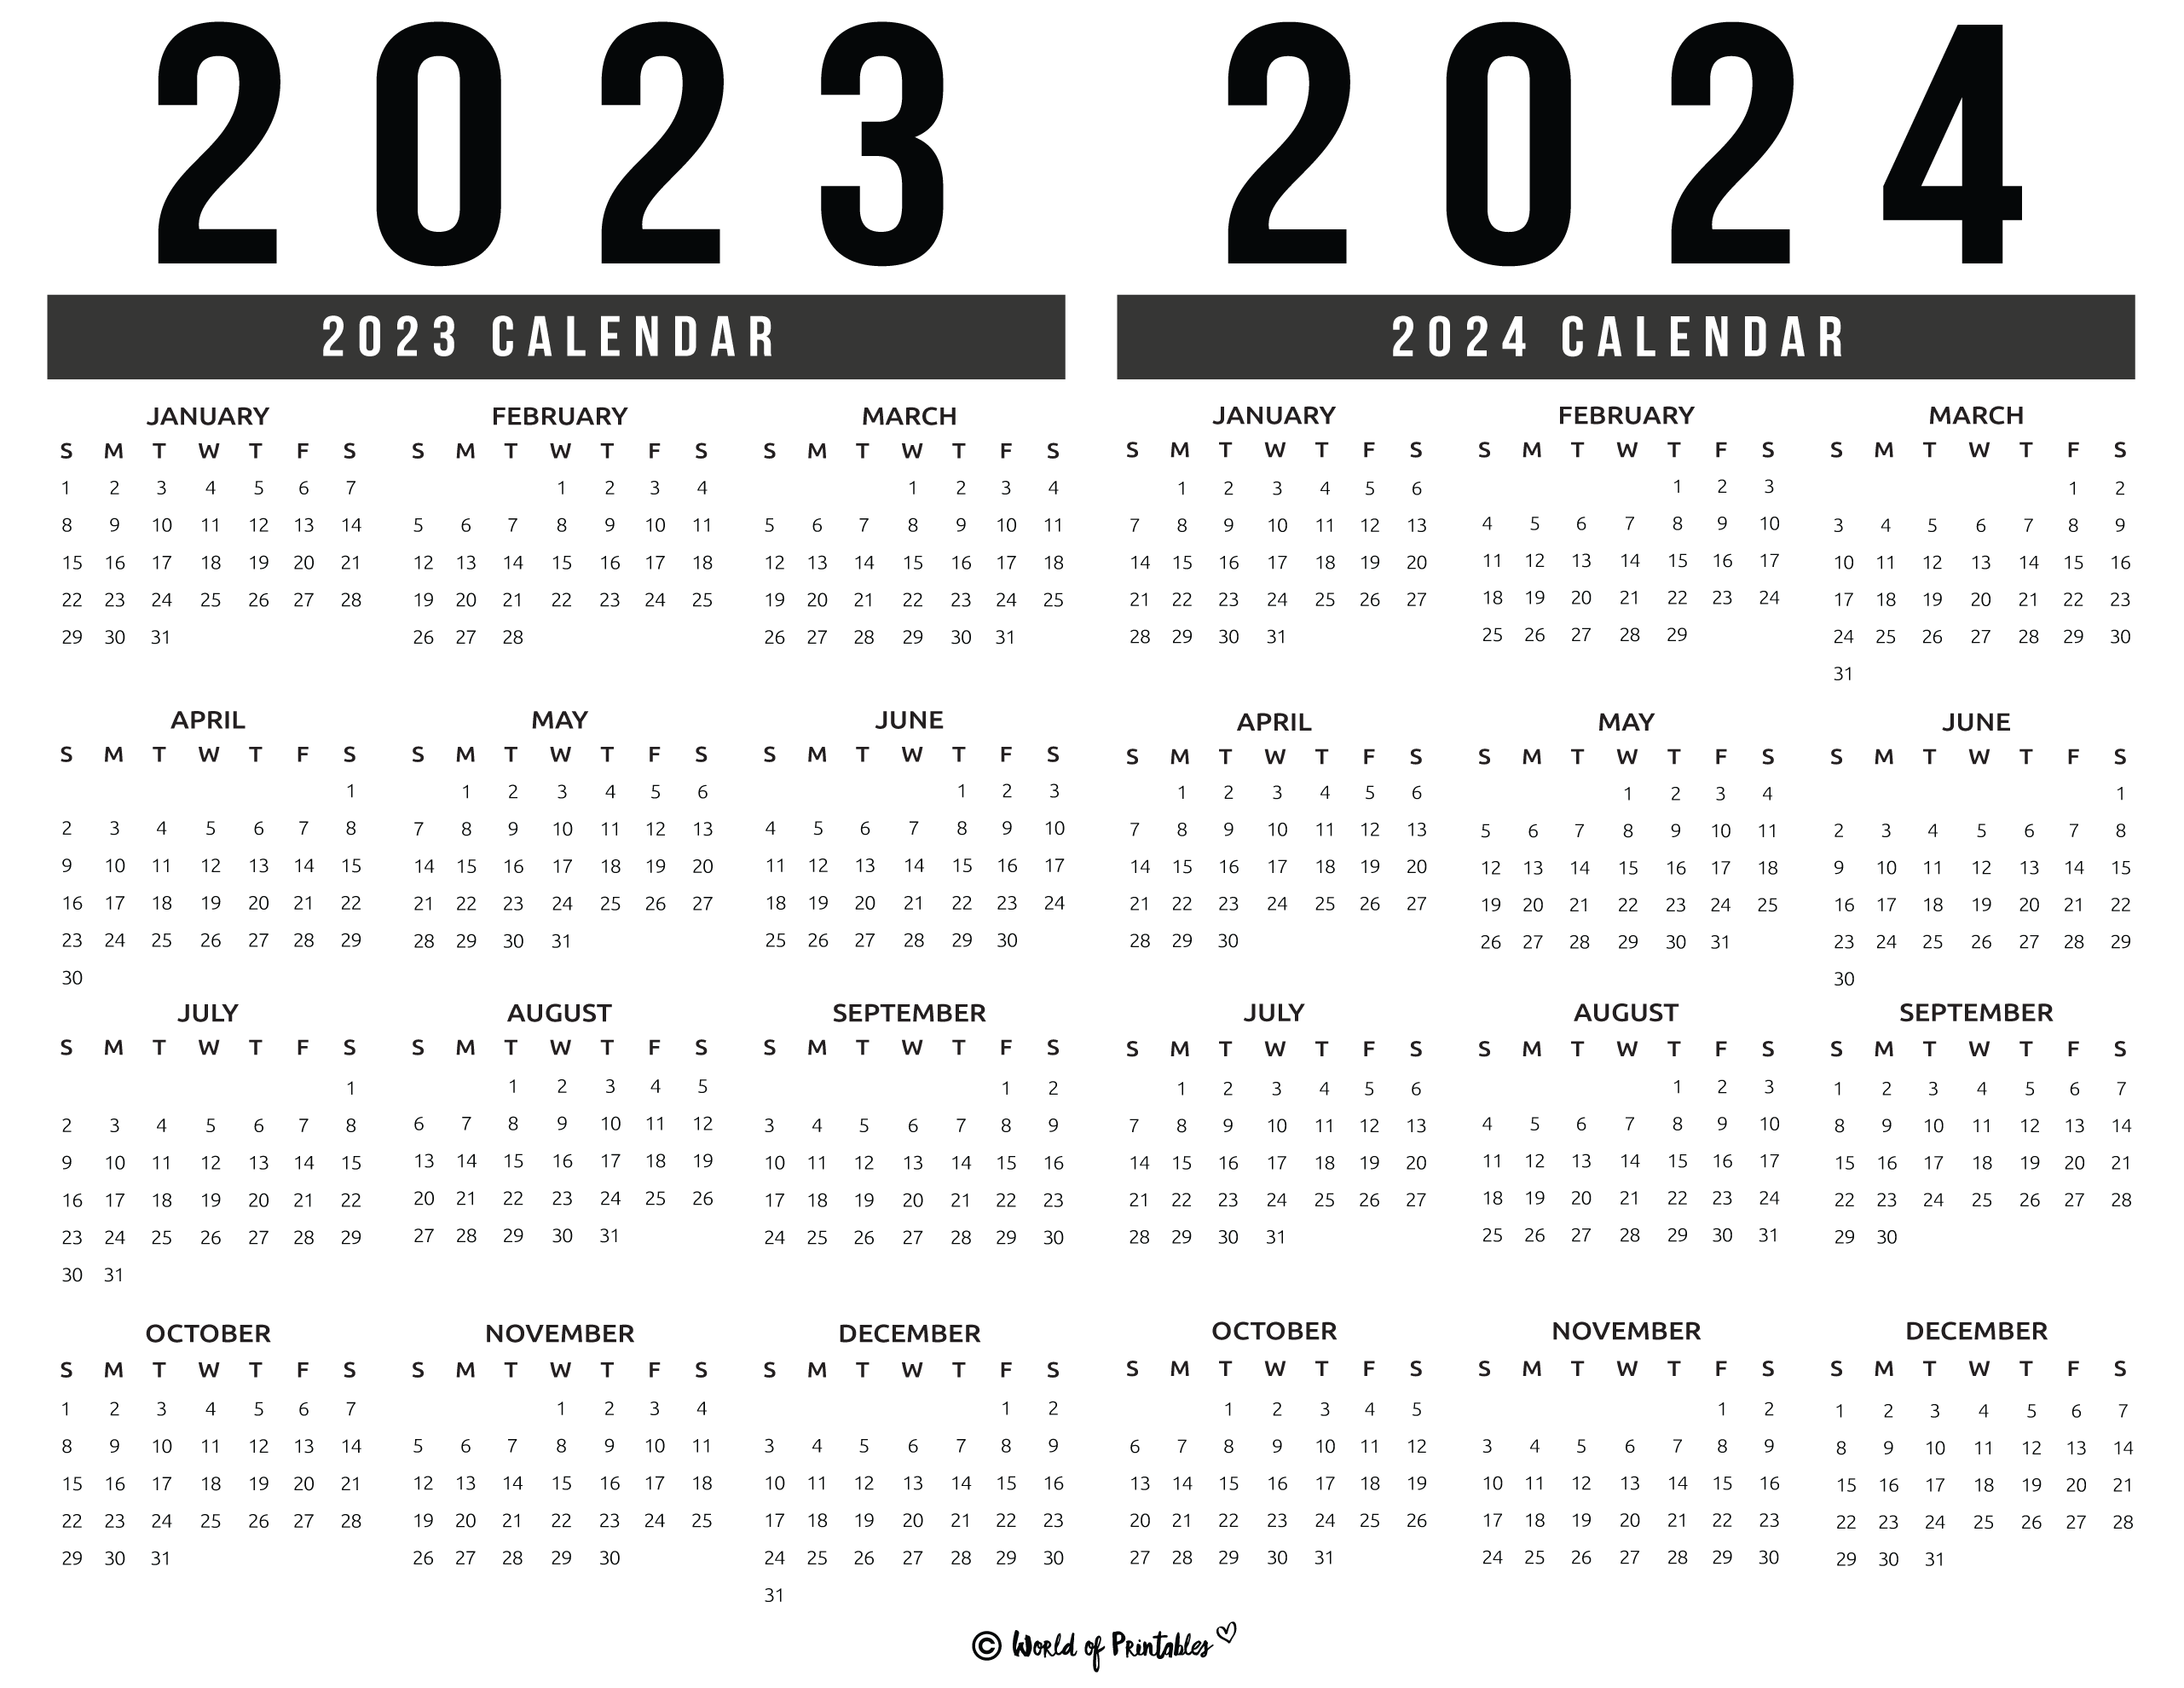 2023 2024 Calendar Free Printables - World Of Printables for Free Printable Monthly Calendar 2023 And 2024